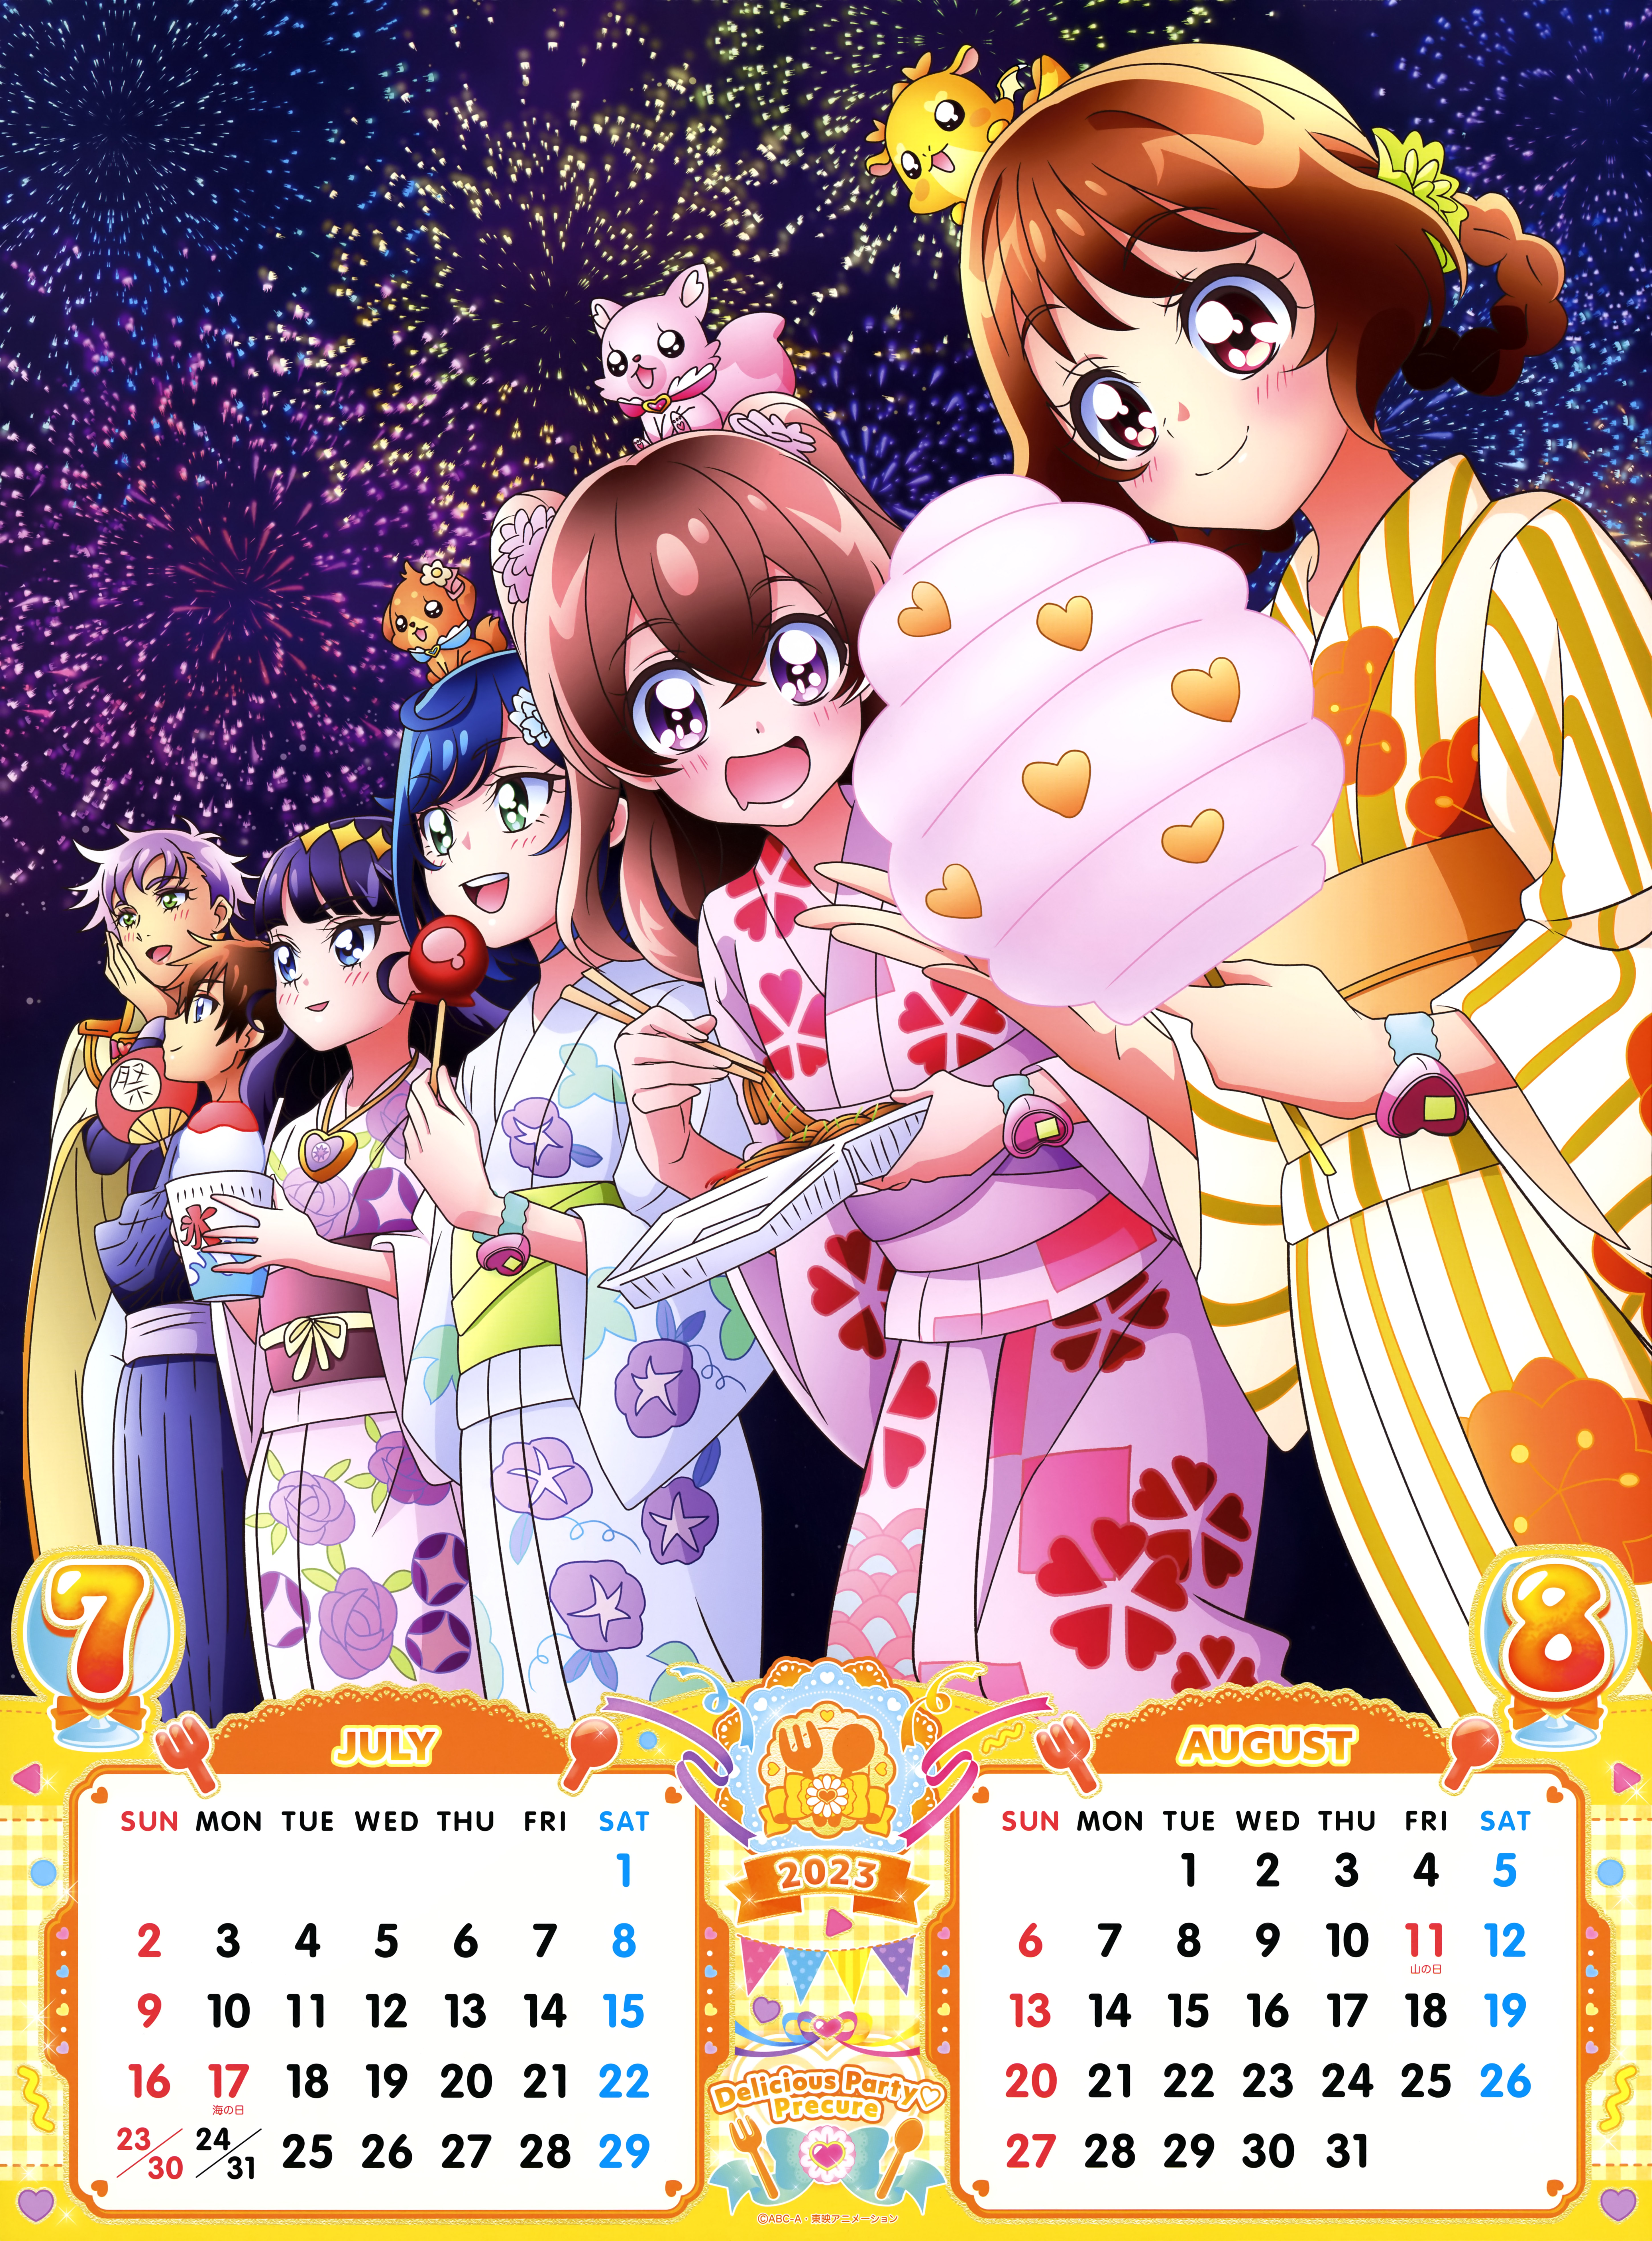 USED) Calendar 2023 - PreCure Series (テレビアニメ 2023年度